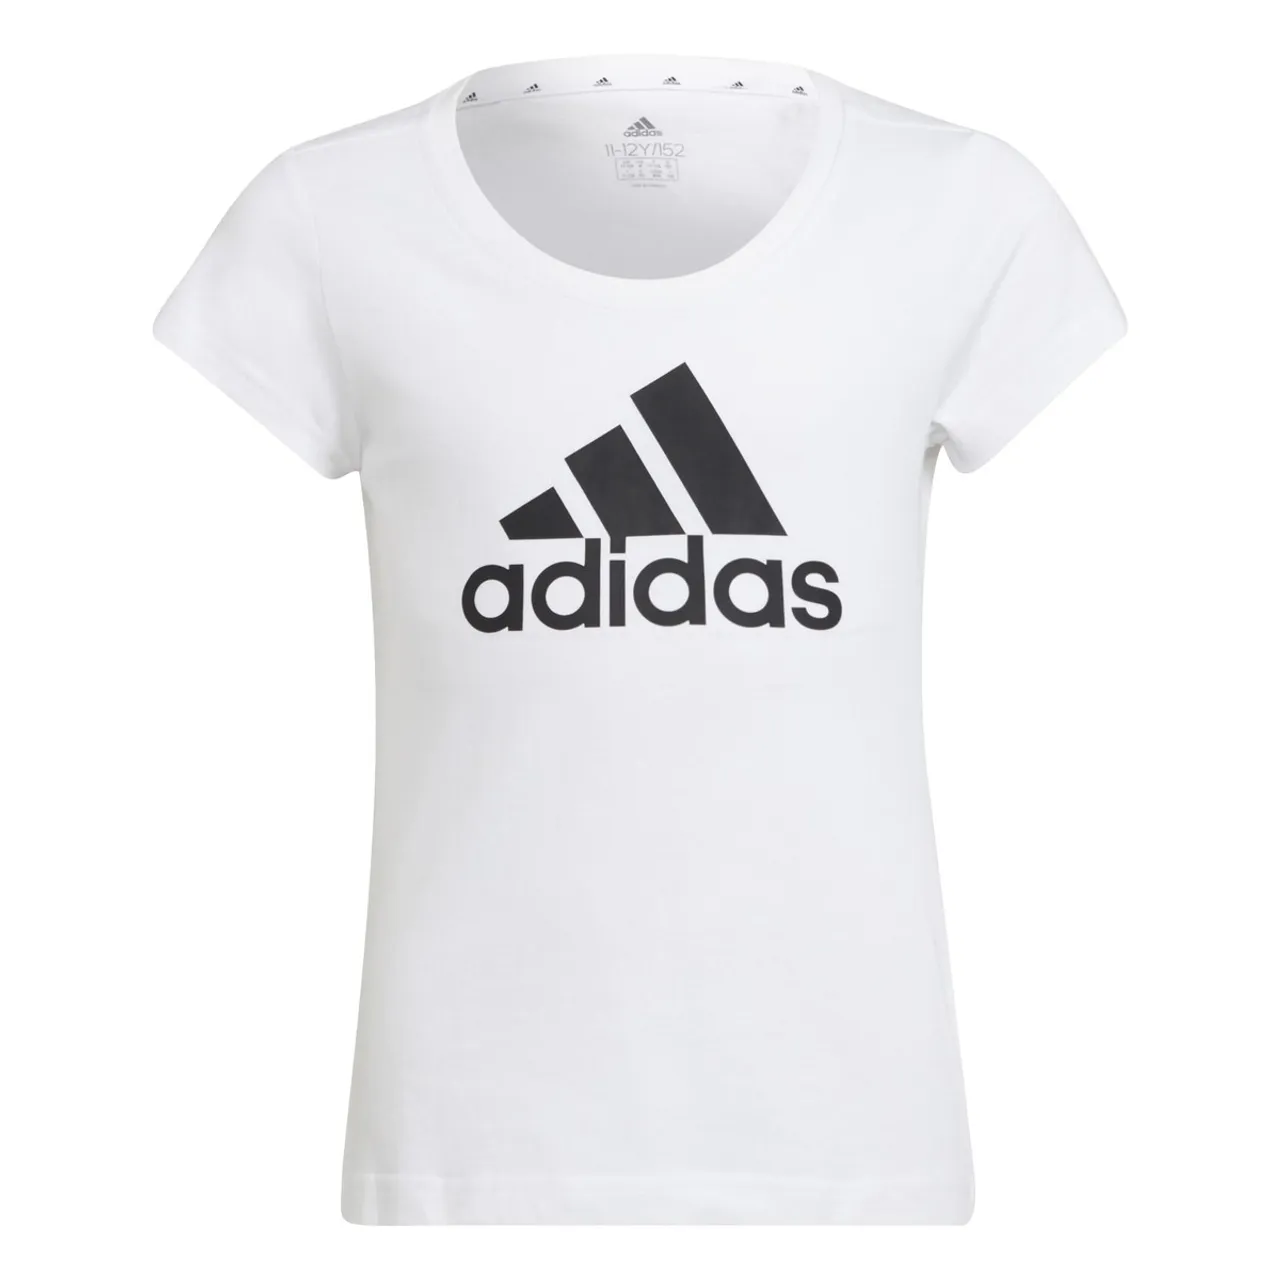 adidas  FEDELINE  girls's Children's T shirt in White